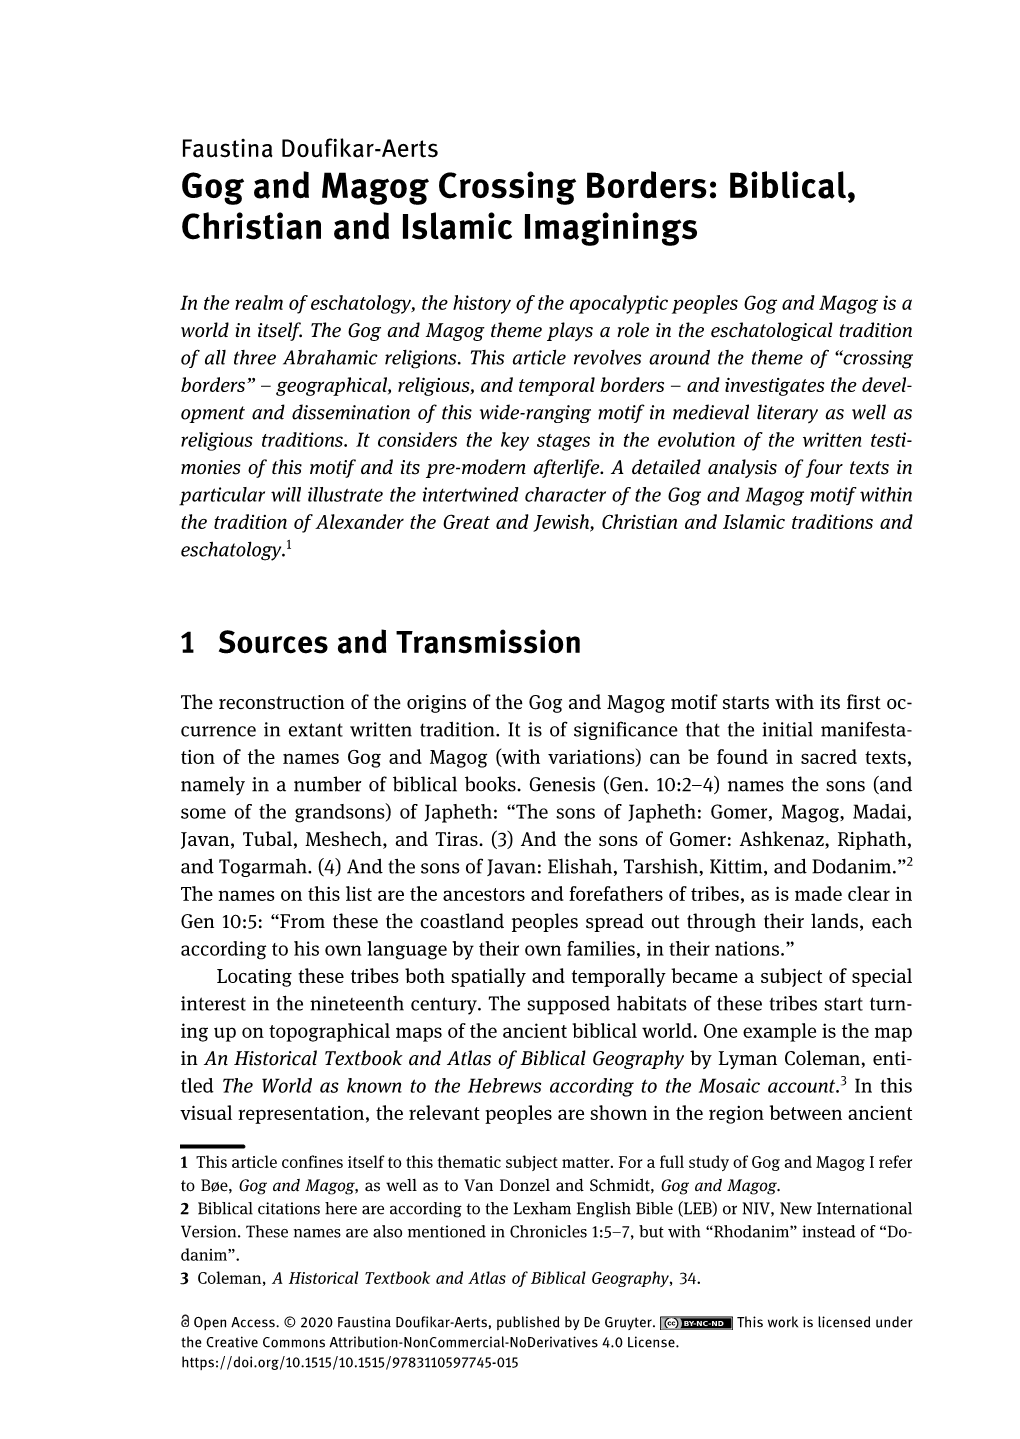 Gog and Magog Crossing Borders: Biblical, Christian and Islamic Imaginings